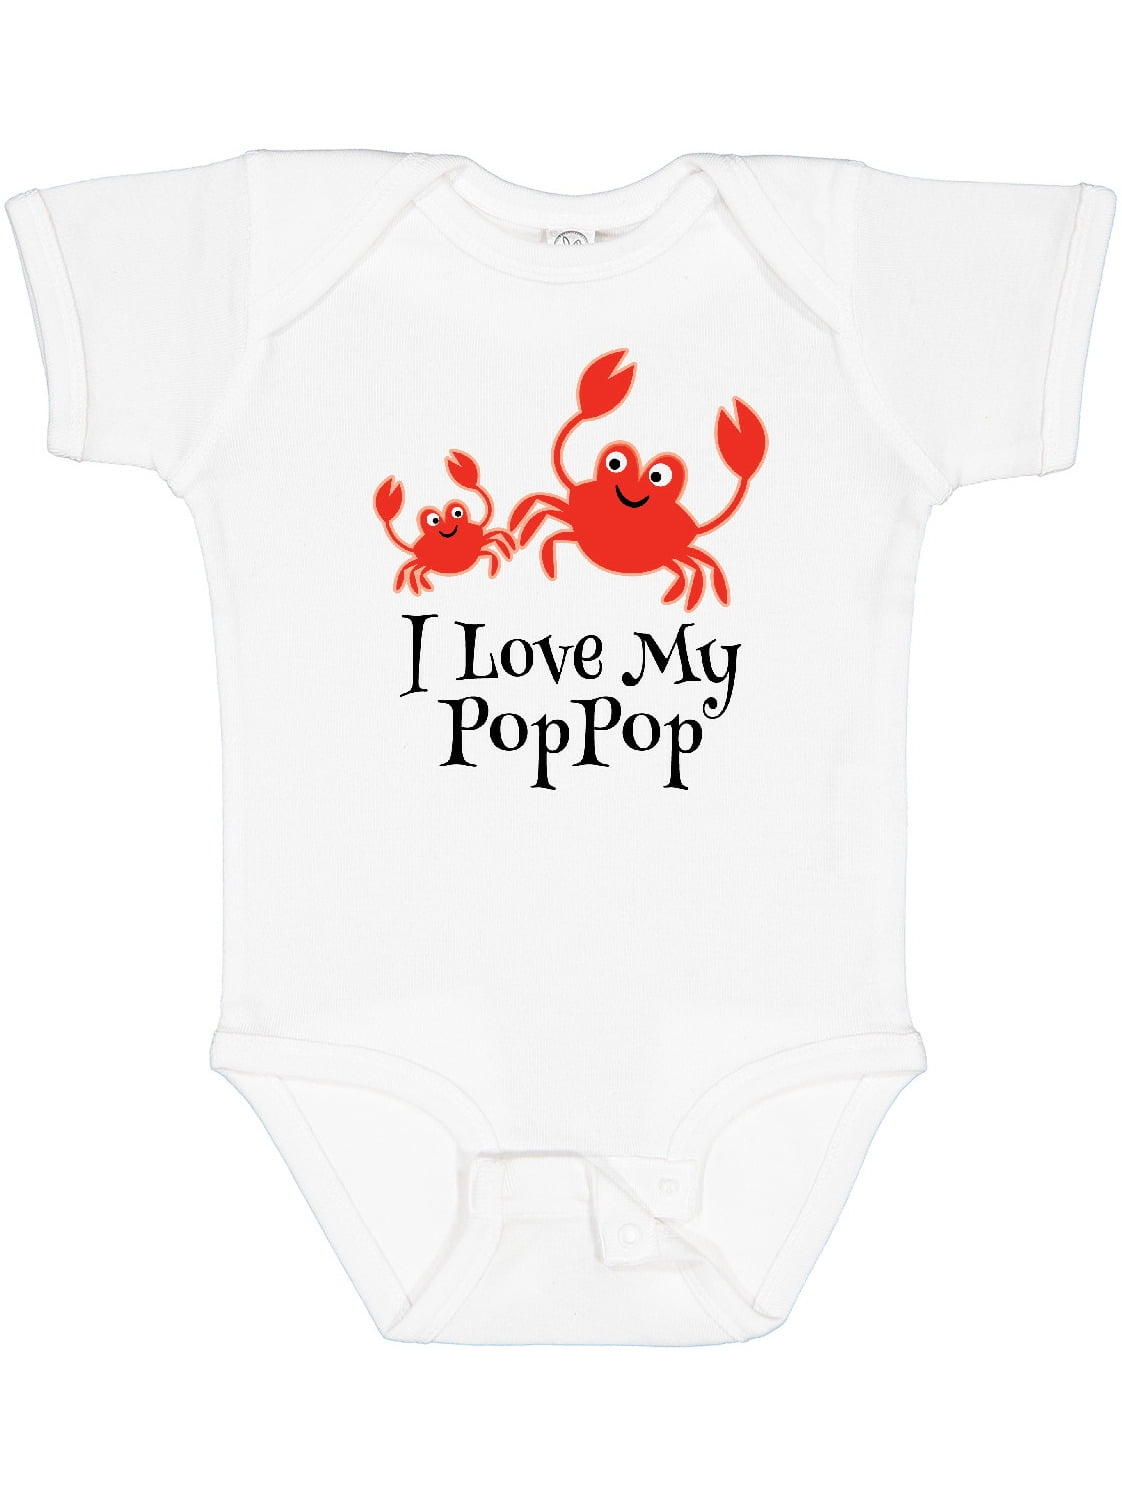 Mommy's Little Lobster Friends TV Show Theme Pregnancy Reveal Baby Bodysuit